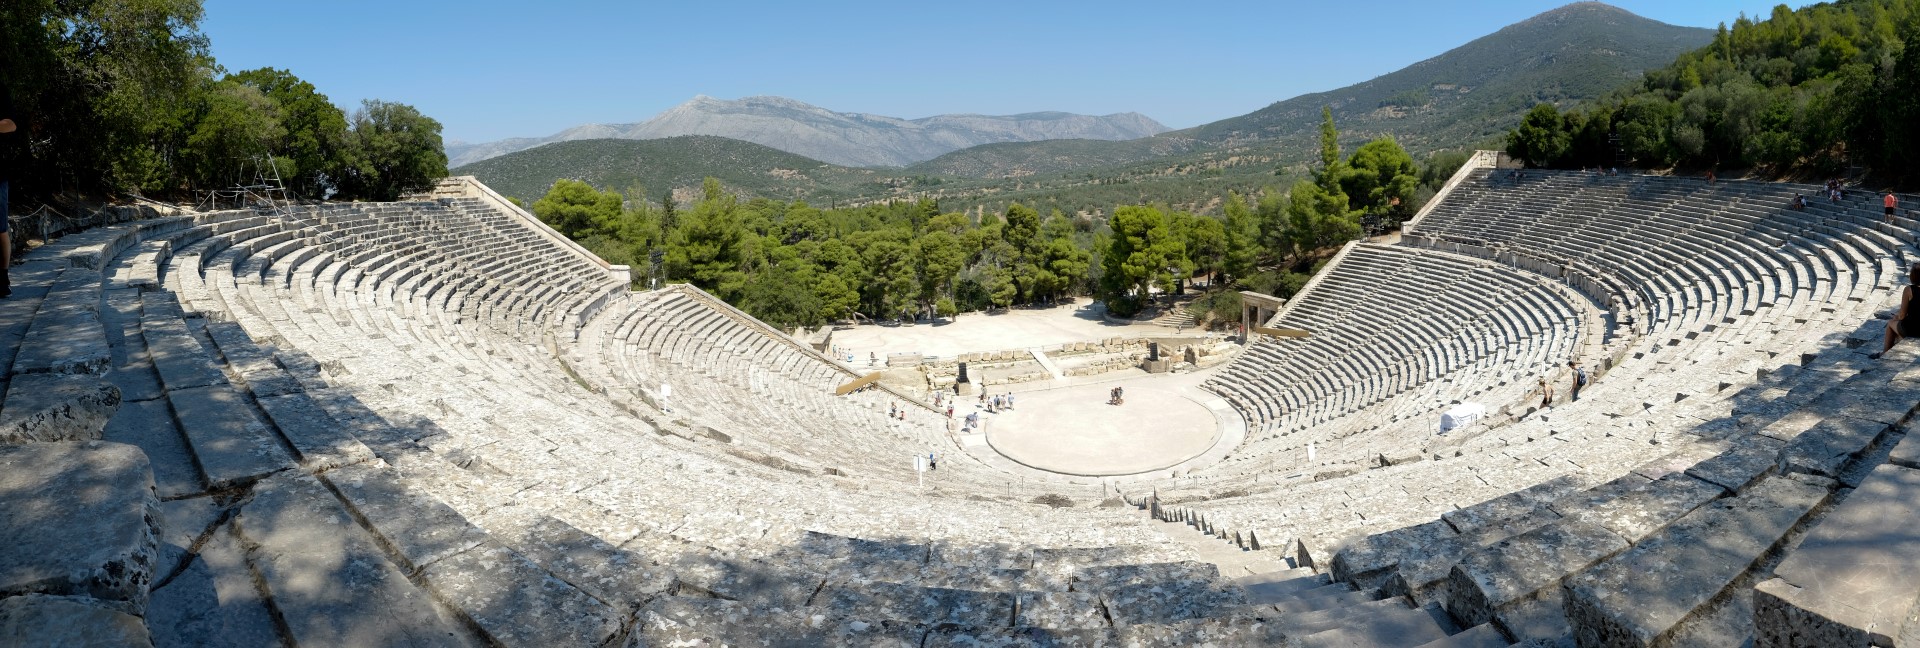 Epidauro, l'antico teatro greco dall'acustica perfetta